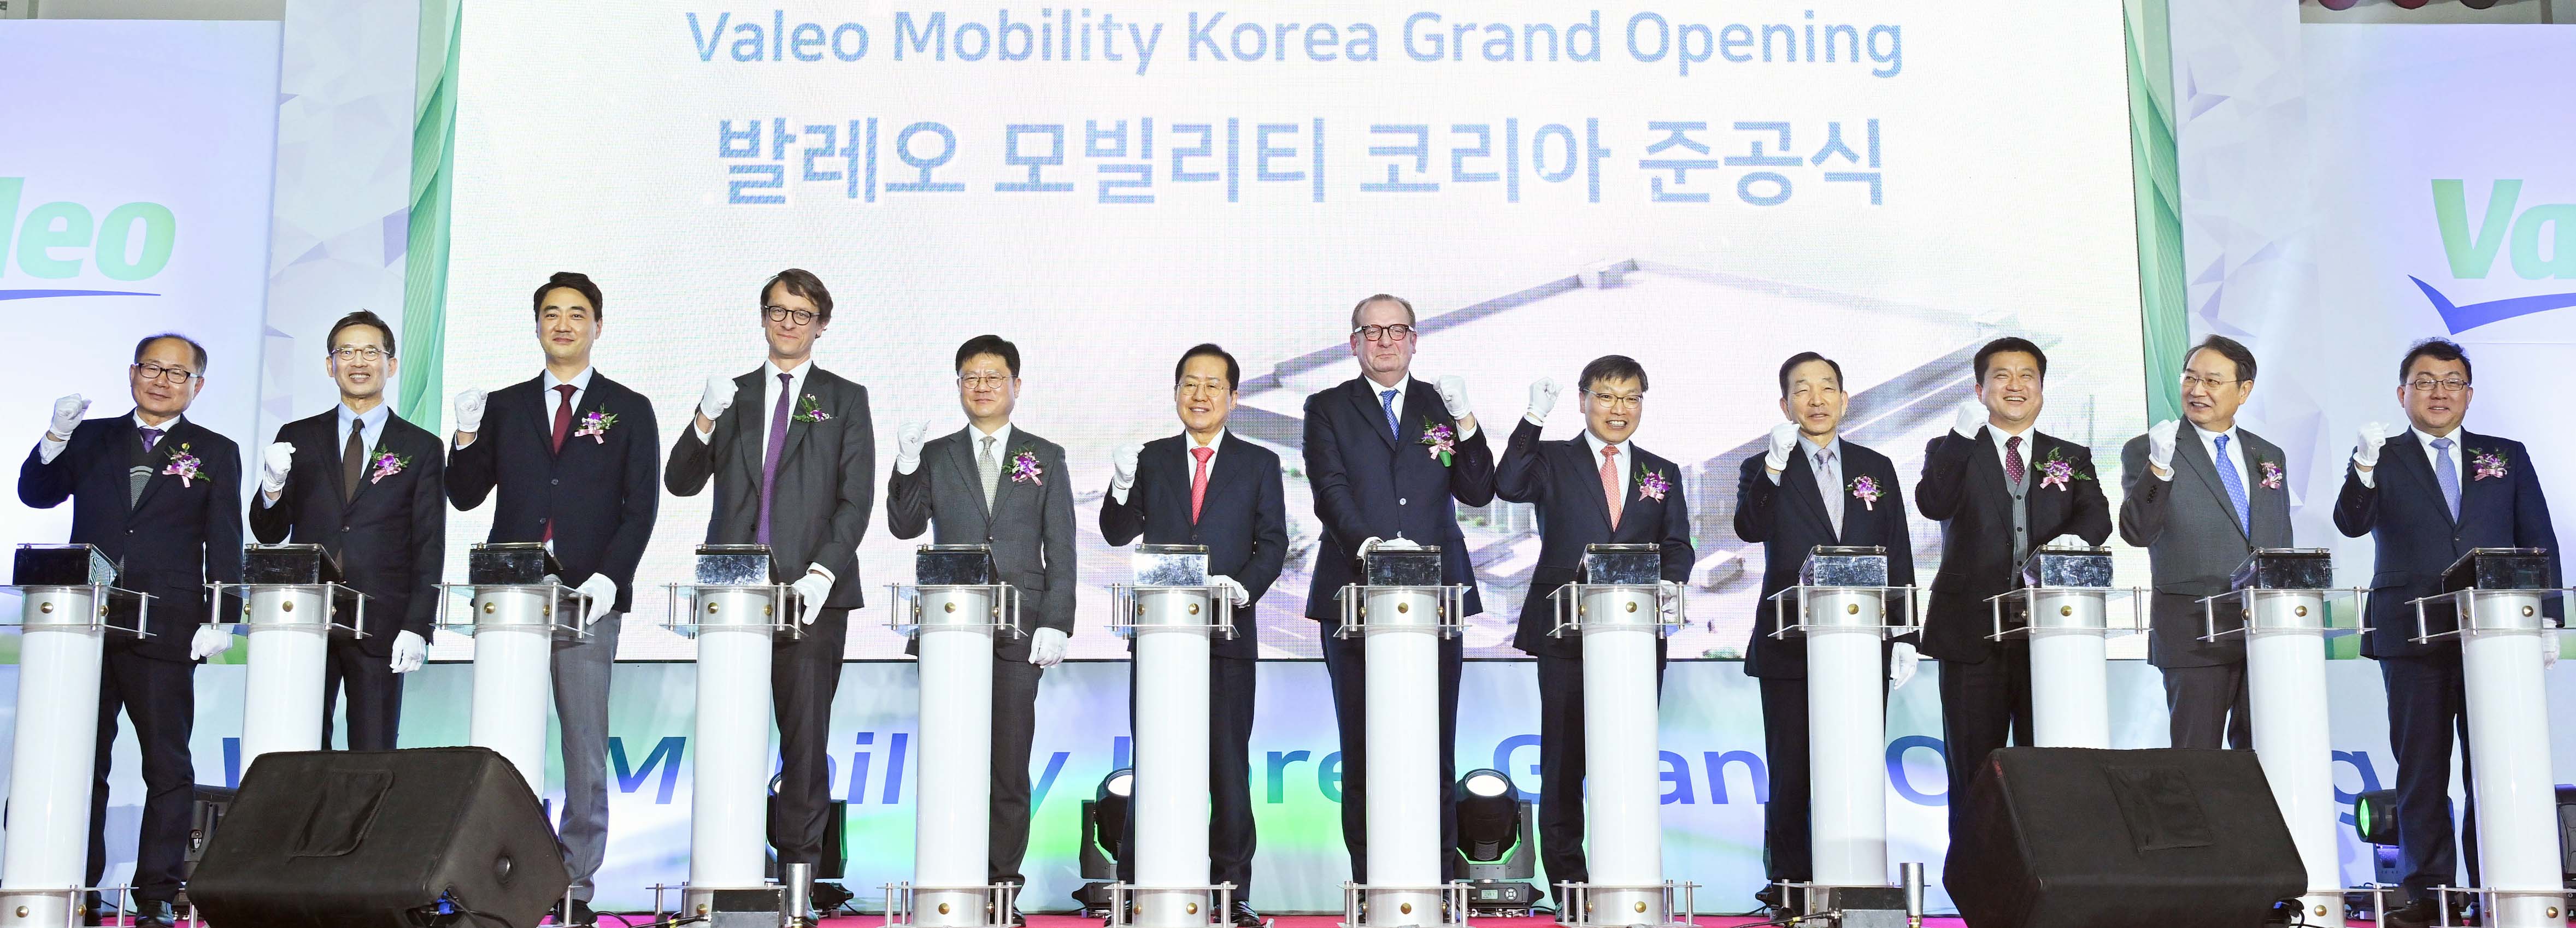 Valeo Mobility Korea’s production facility completion ceremony